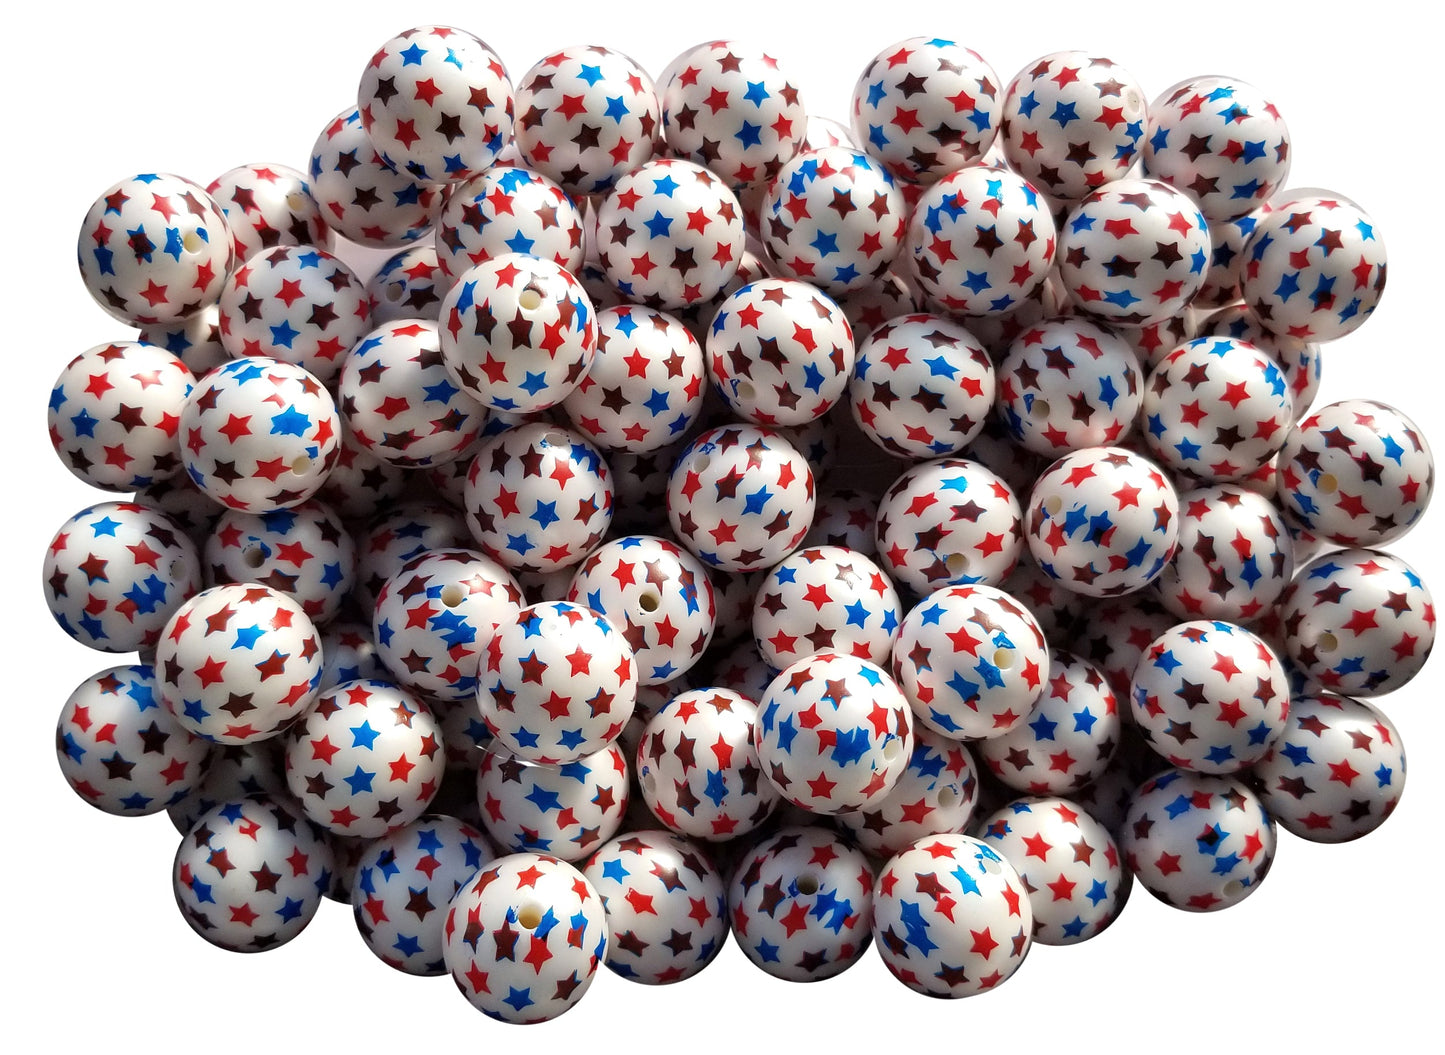 USA stars 20mm printed bubblegum beads